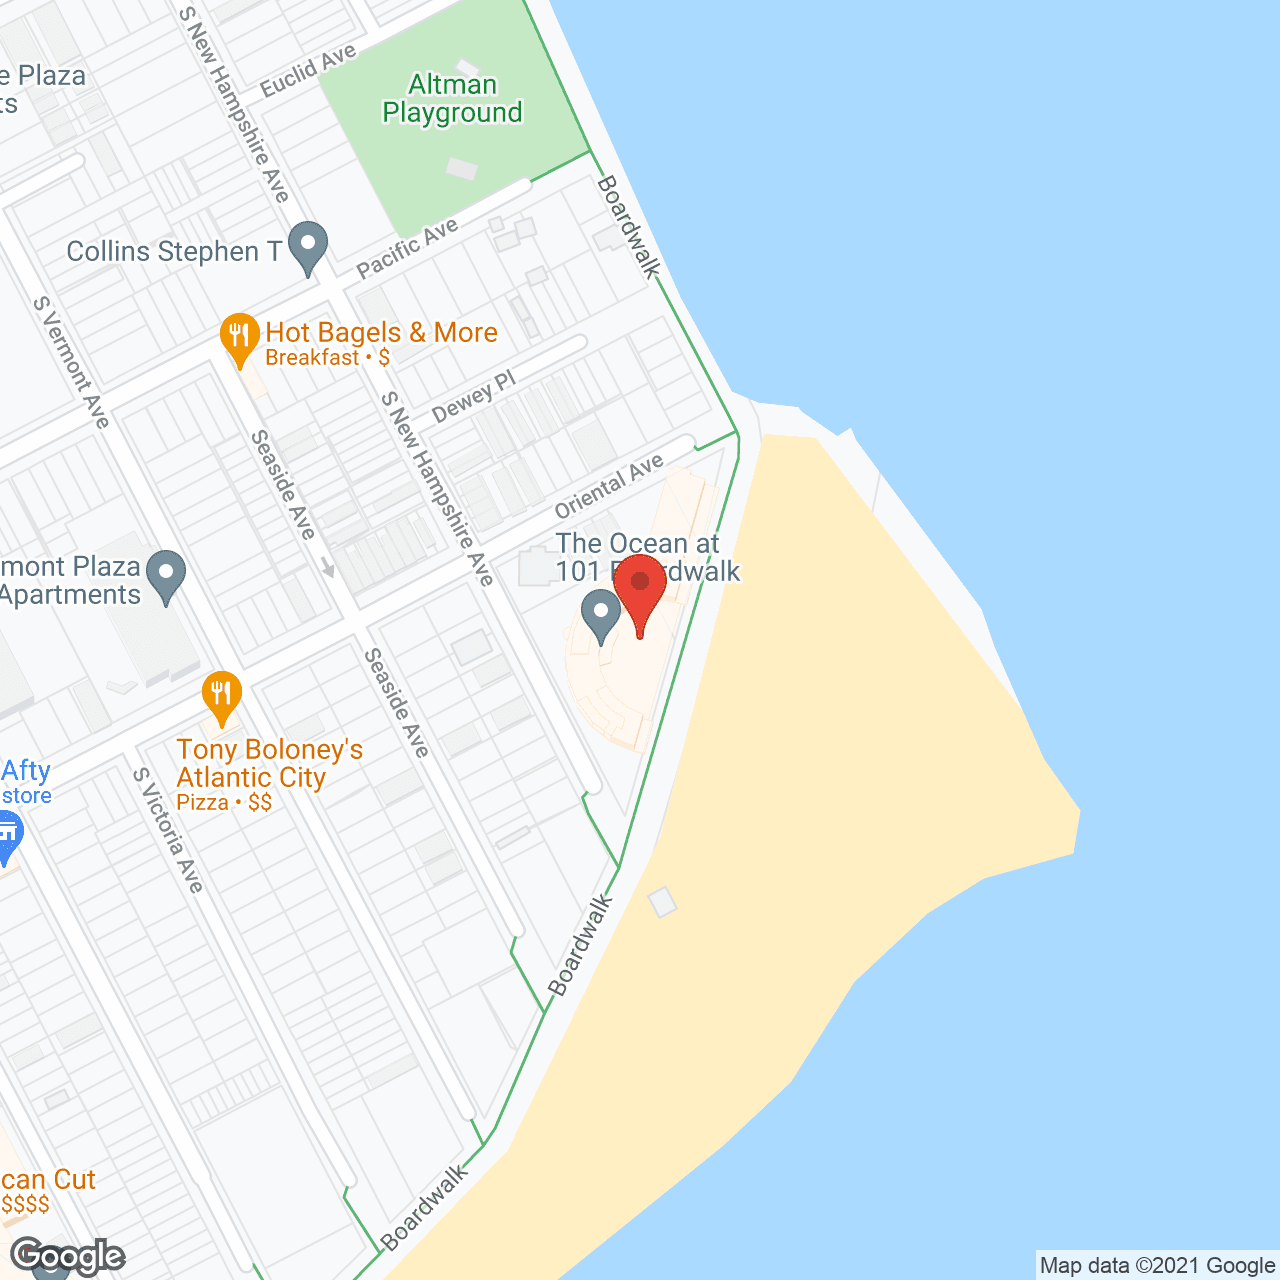 The Ocean at 101 Boardwalk in google map